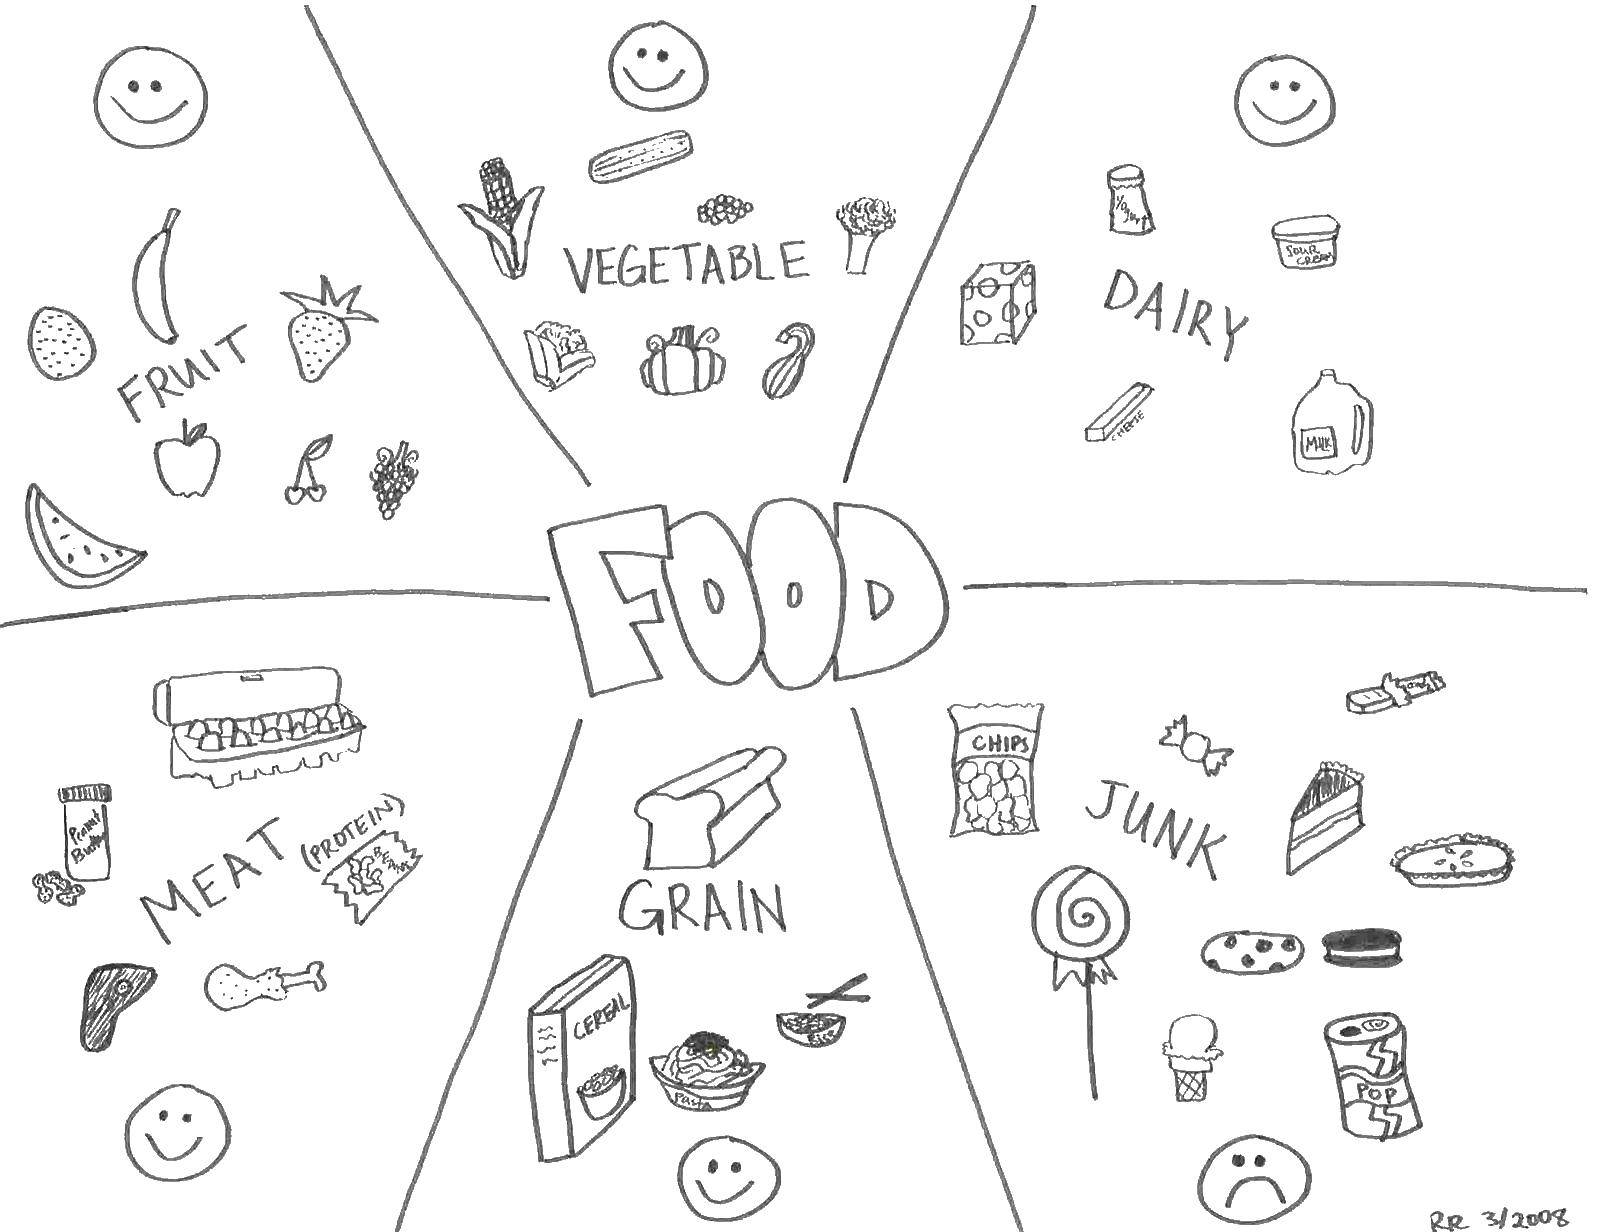 Опис: розмальовки  Їжа розділена за секторами. Категорія: їжа. Теги:  їжа, продукти.